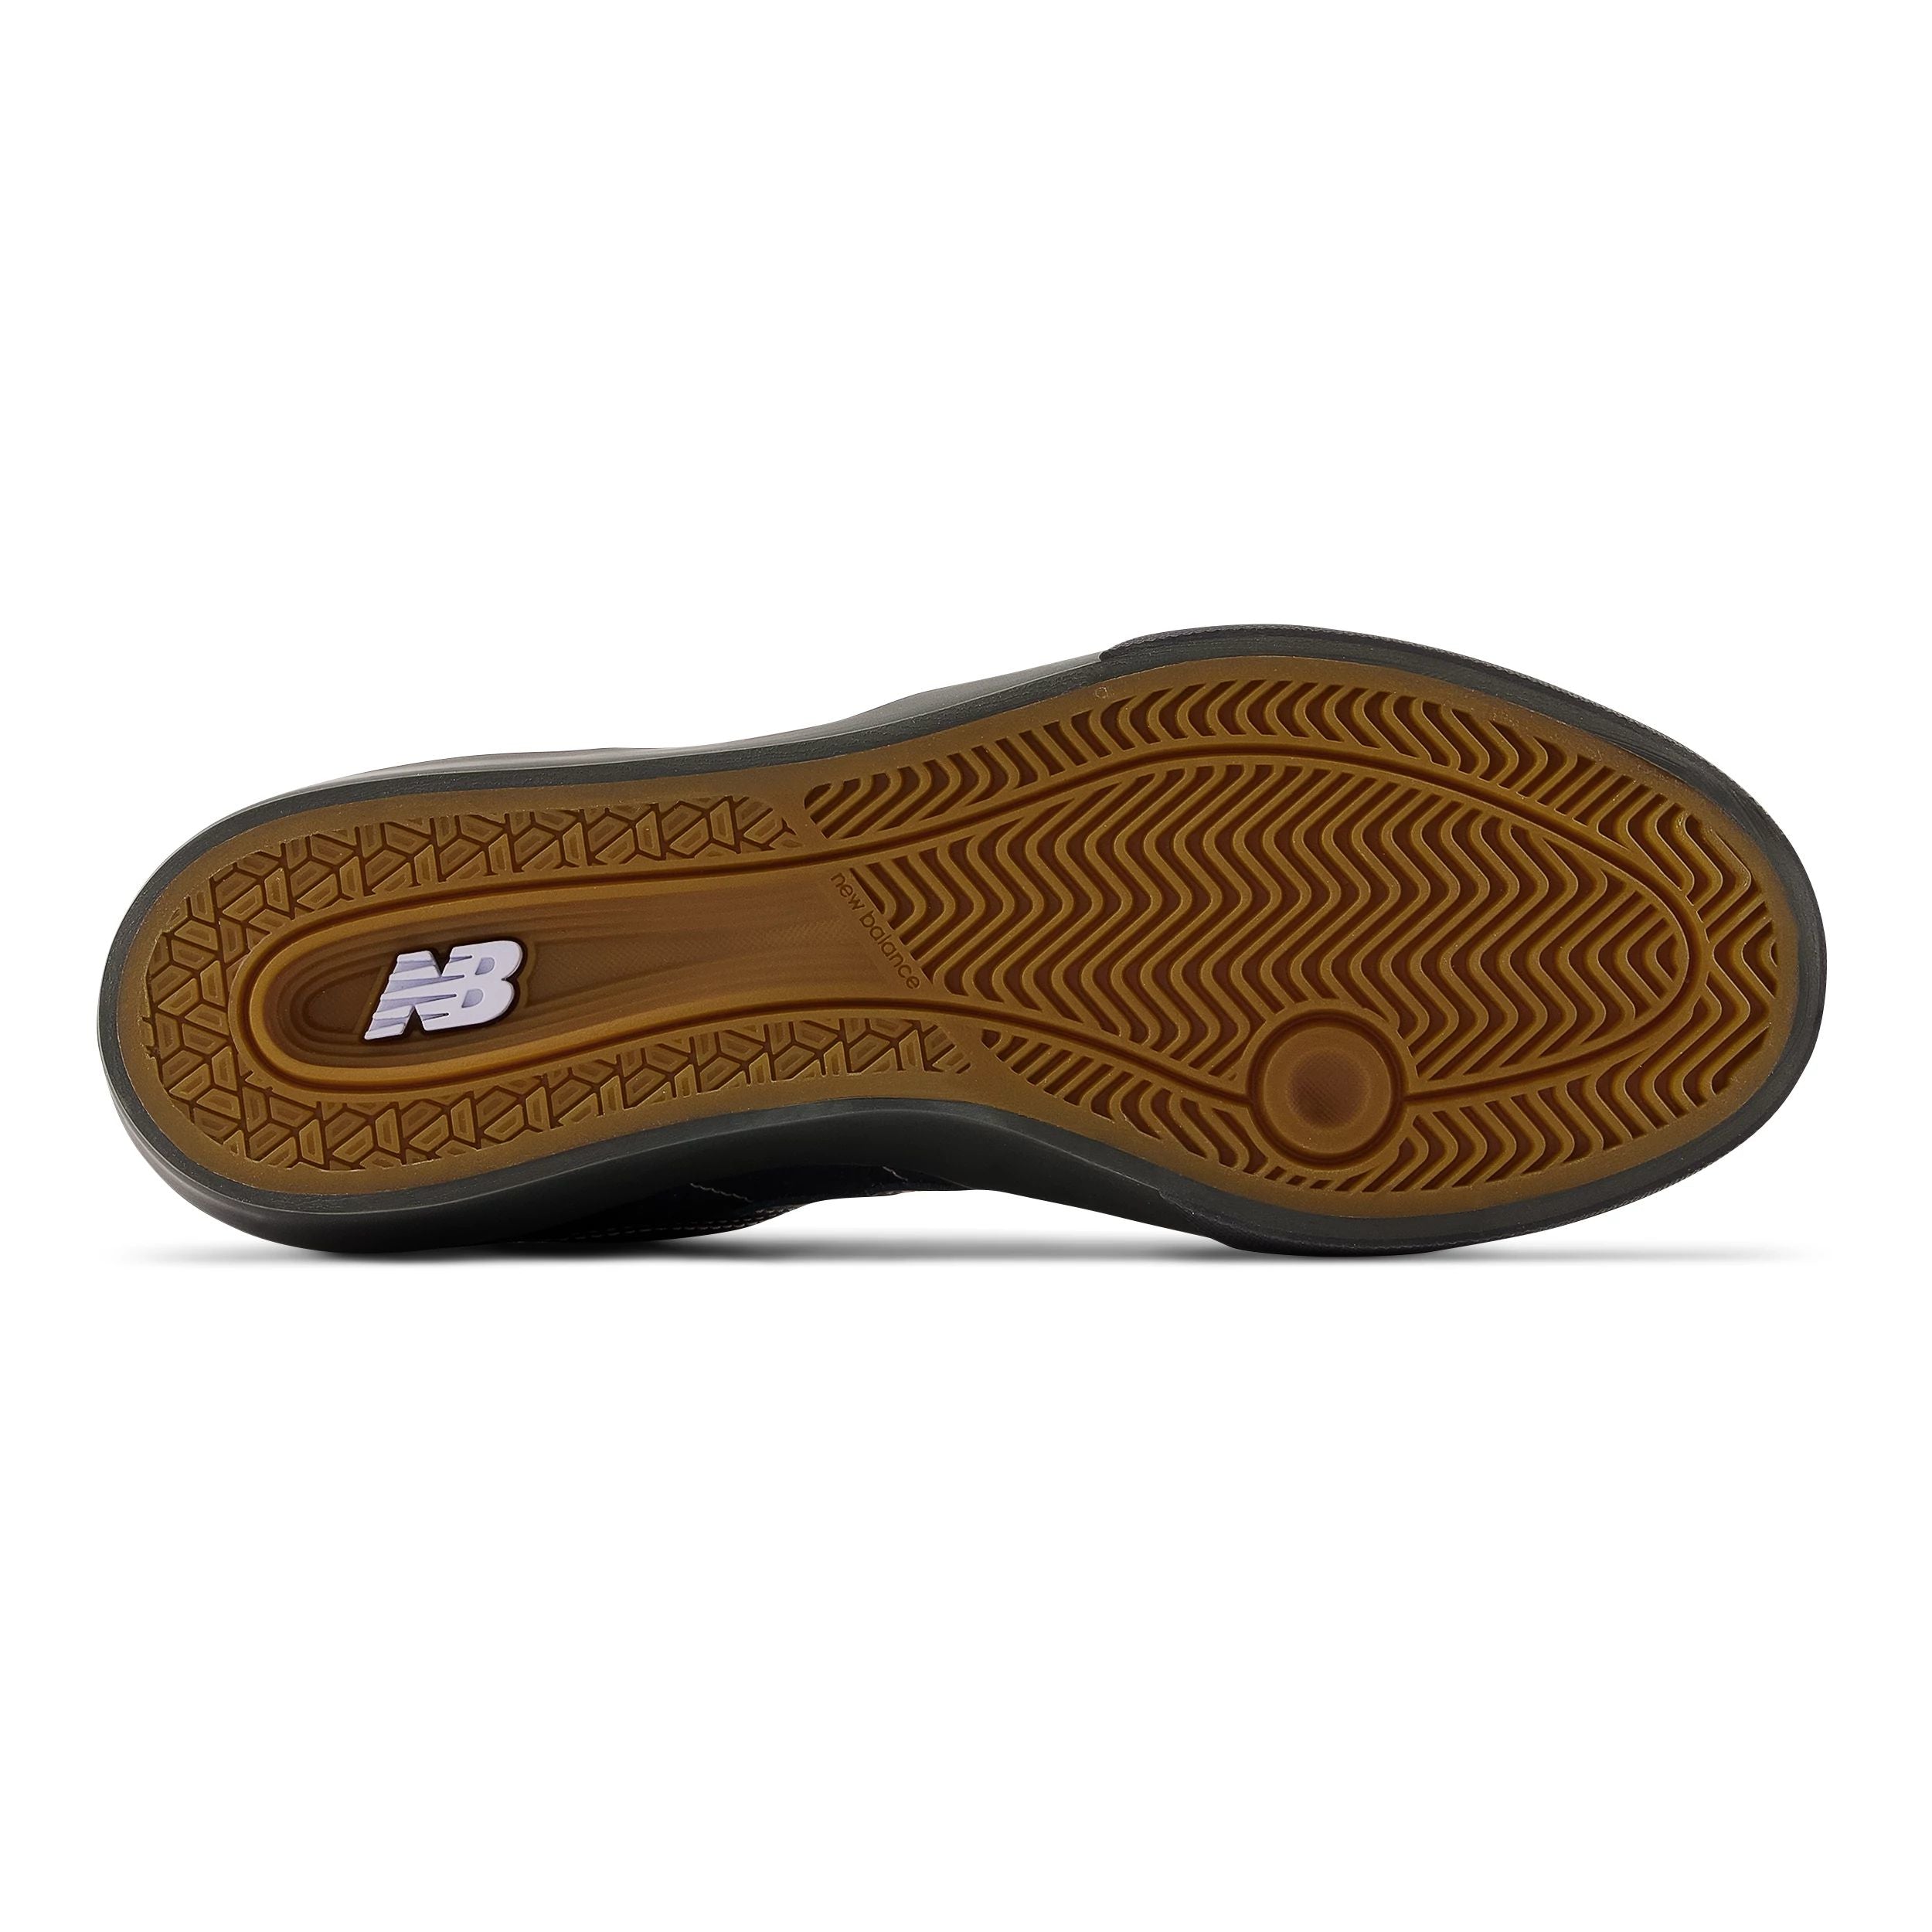 Black/Phantom NM272 NB Numeric Skate Shoe Bottom